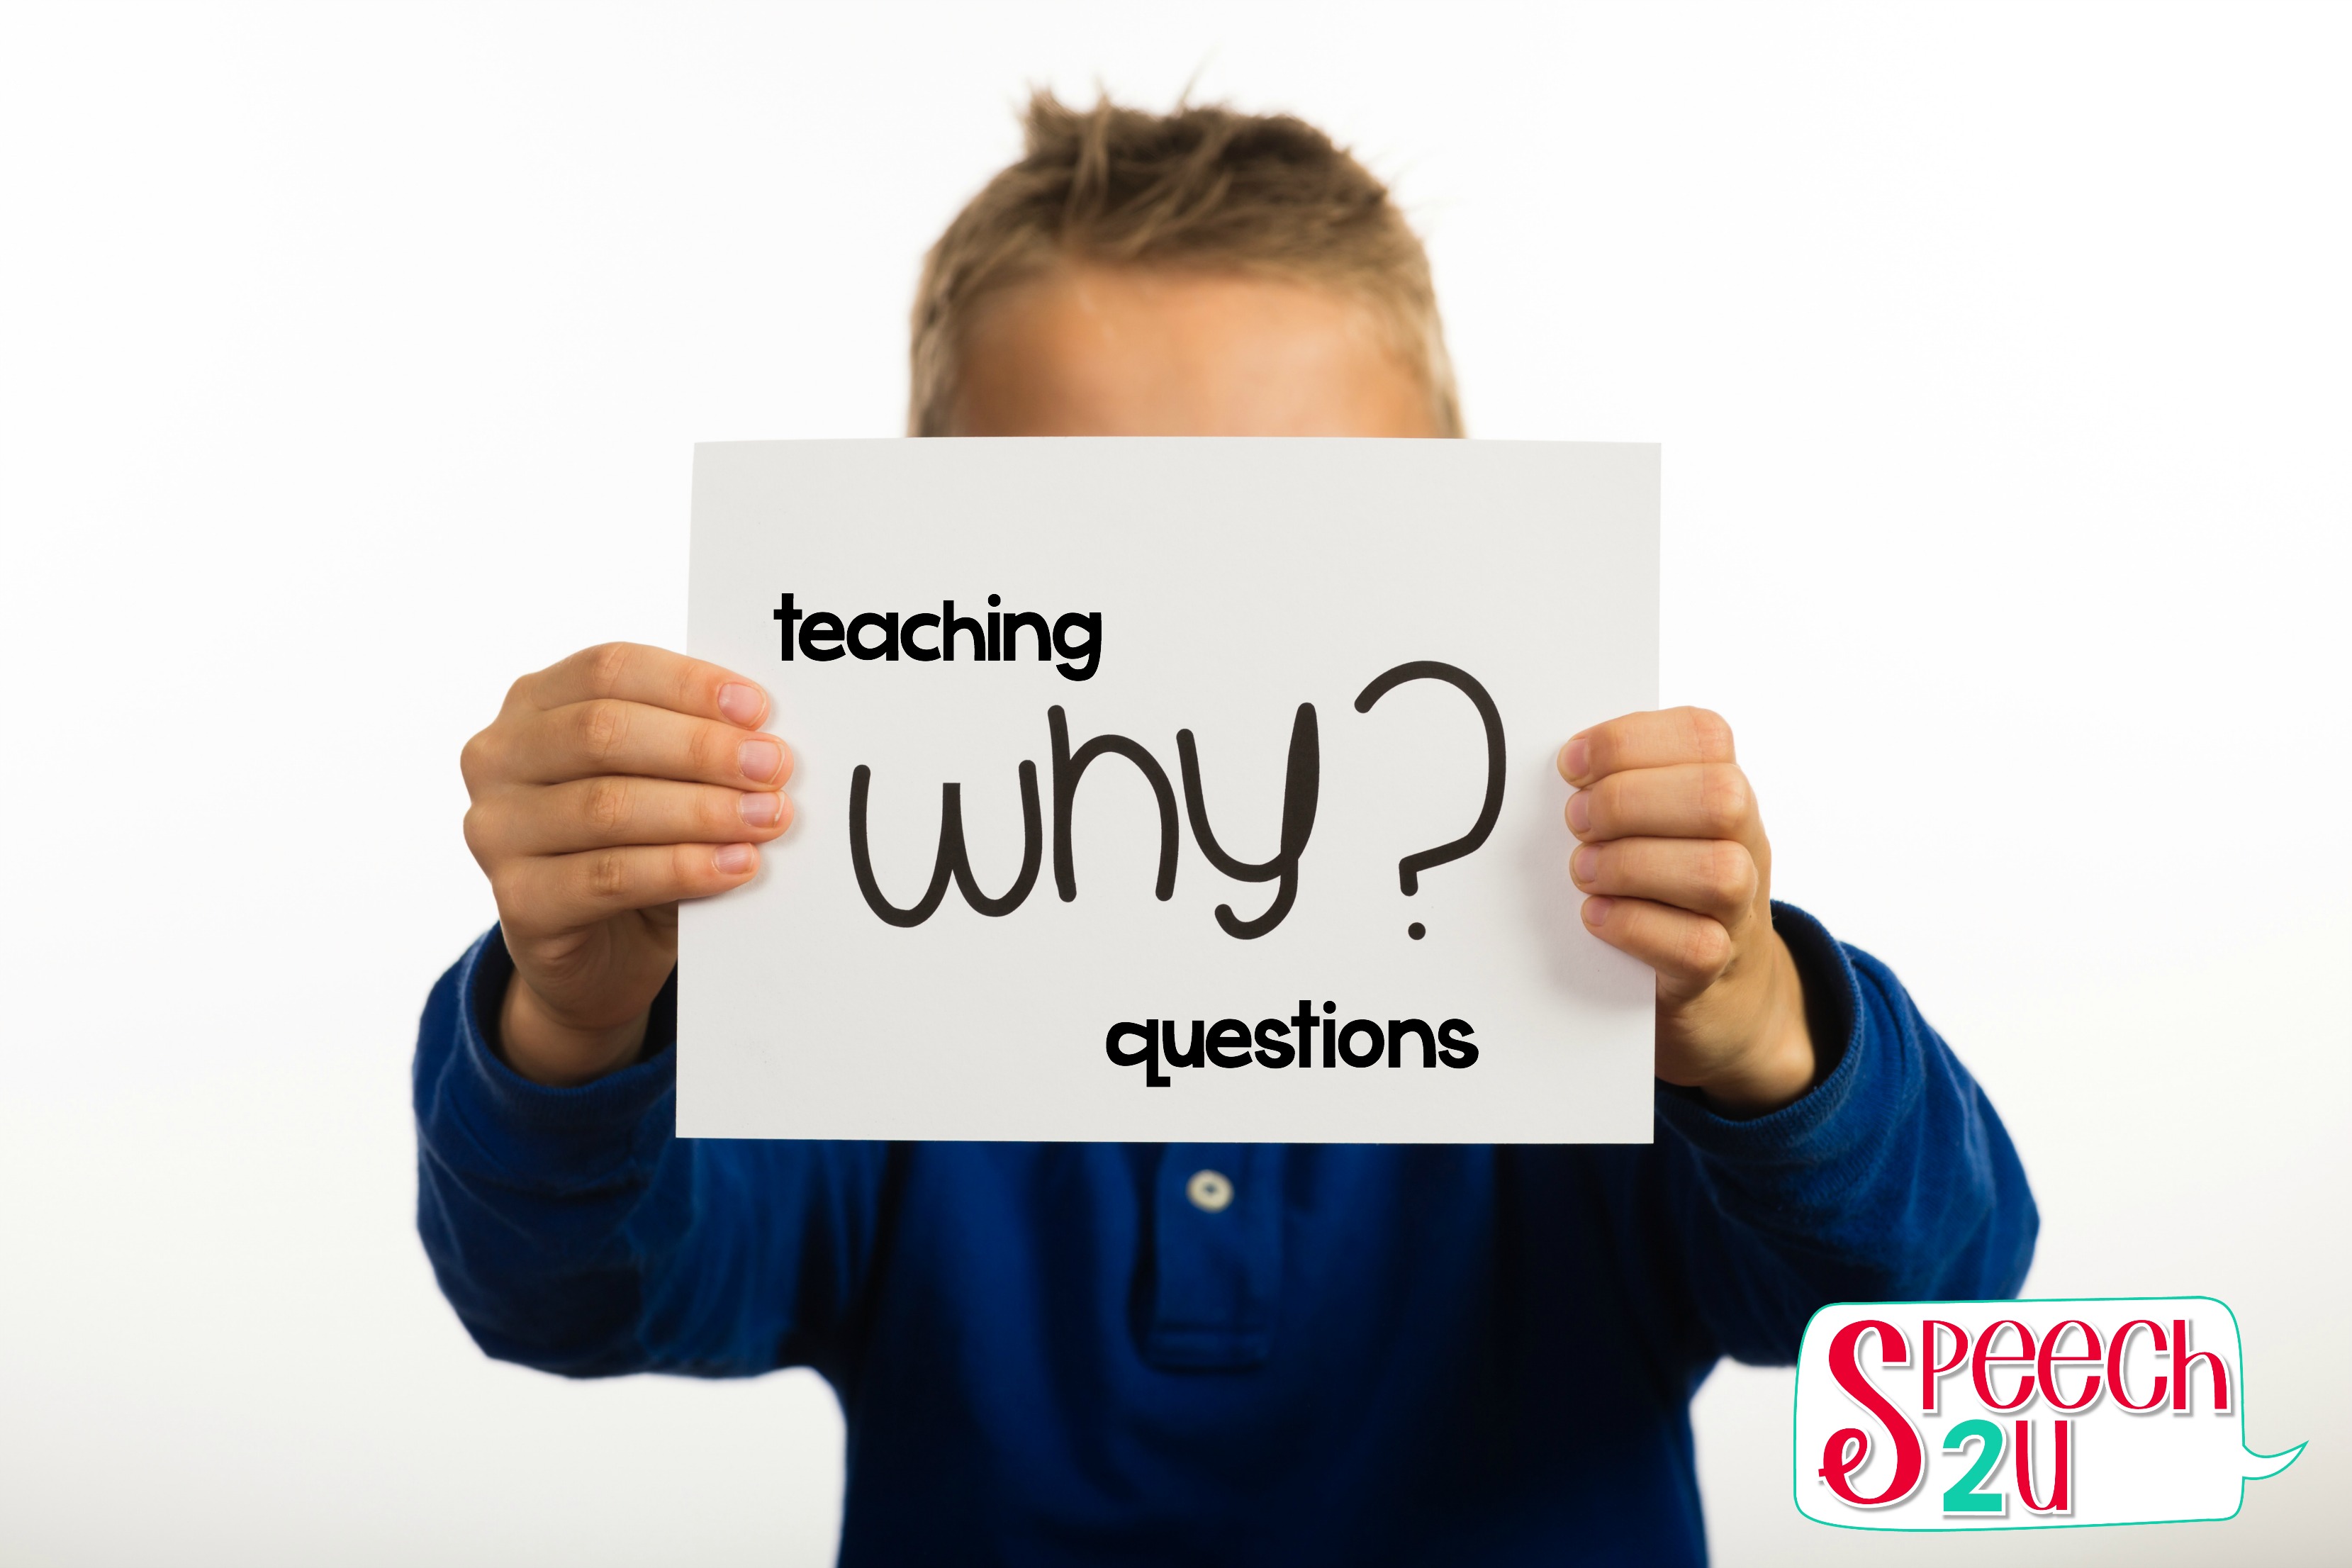 Teaching WHY questions - Speech 2U